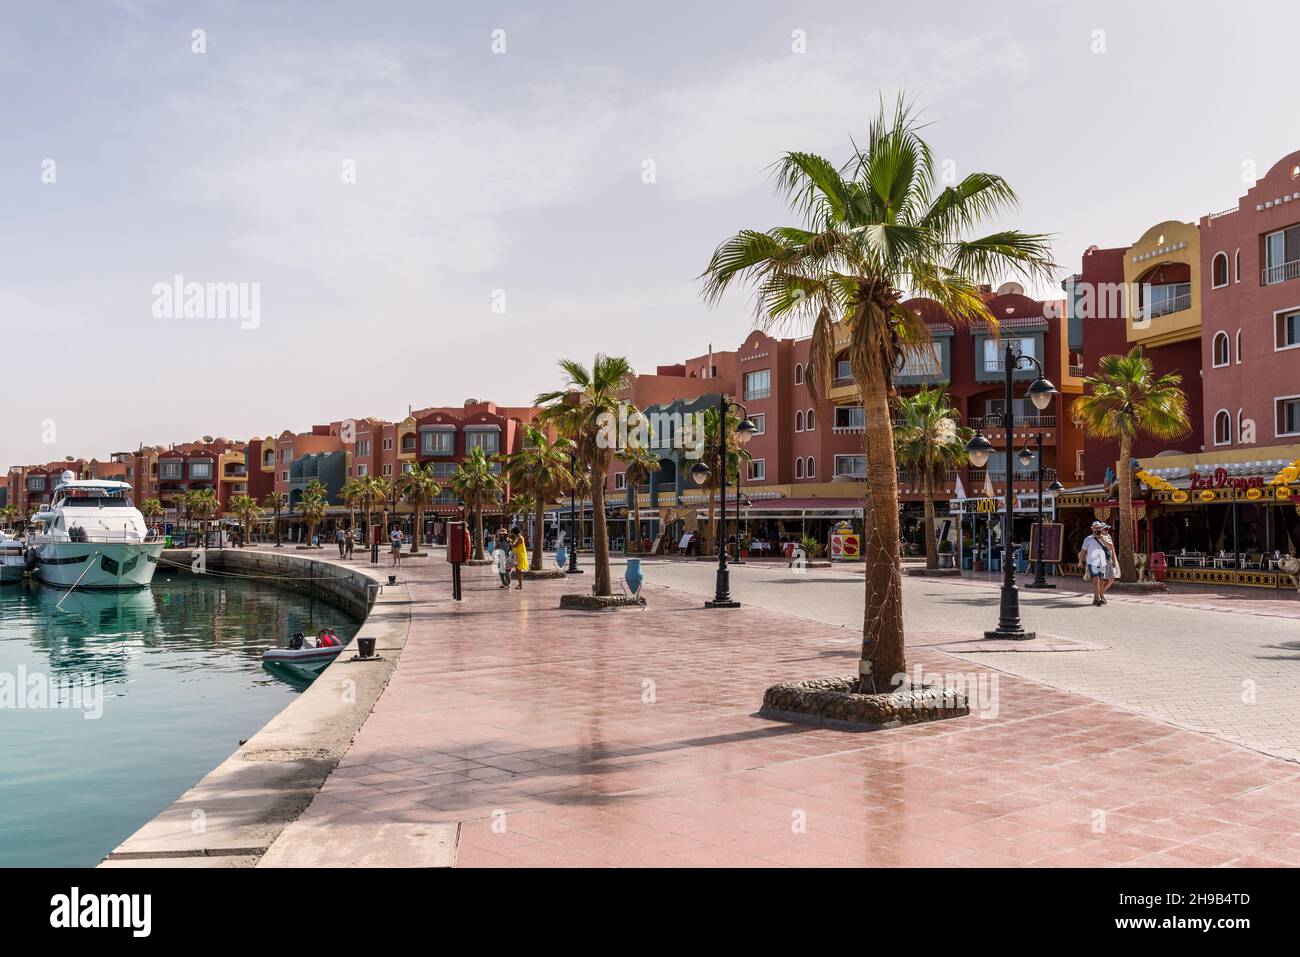 Hurghada, Egypt - May 31, 2021: Colorful promenade street of New Marina in Hurghada, popular beach resort town along Red Sea coast of Egypt. Stock Photo